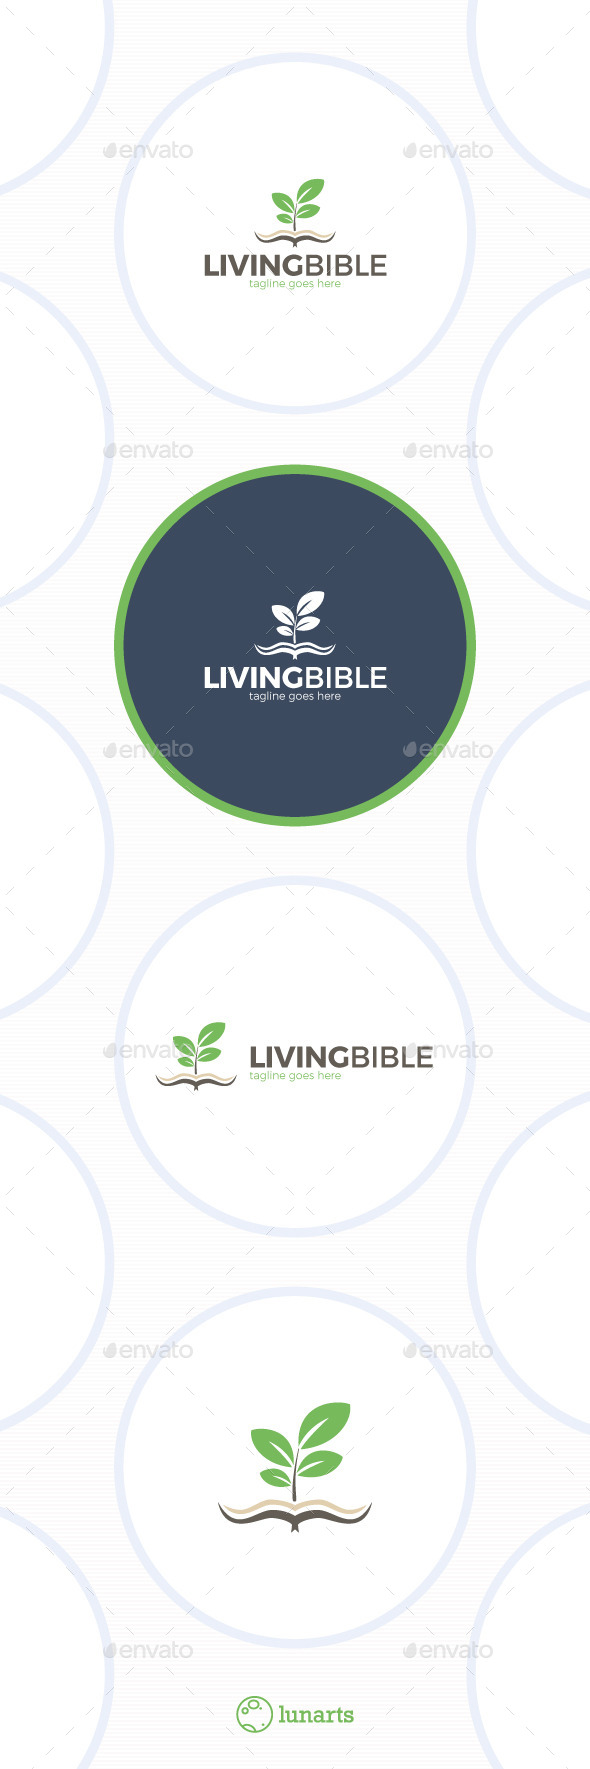 Living Bible Logo